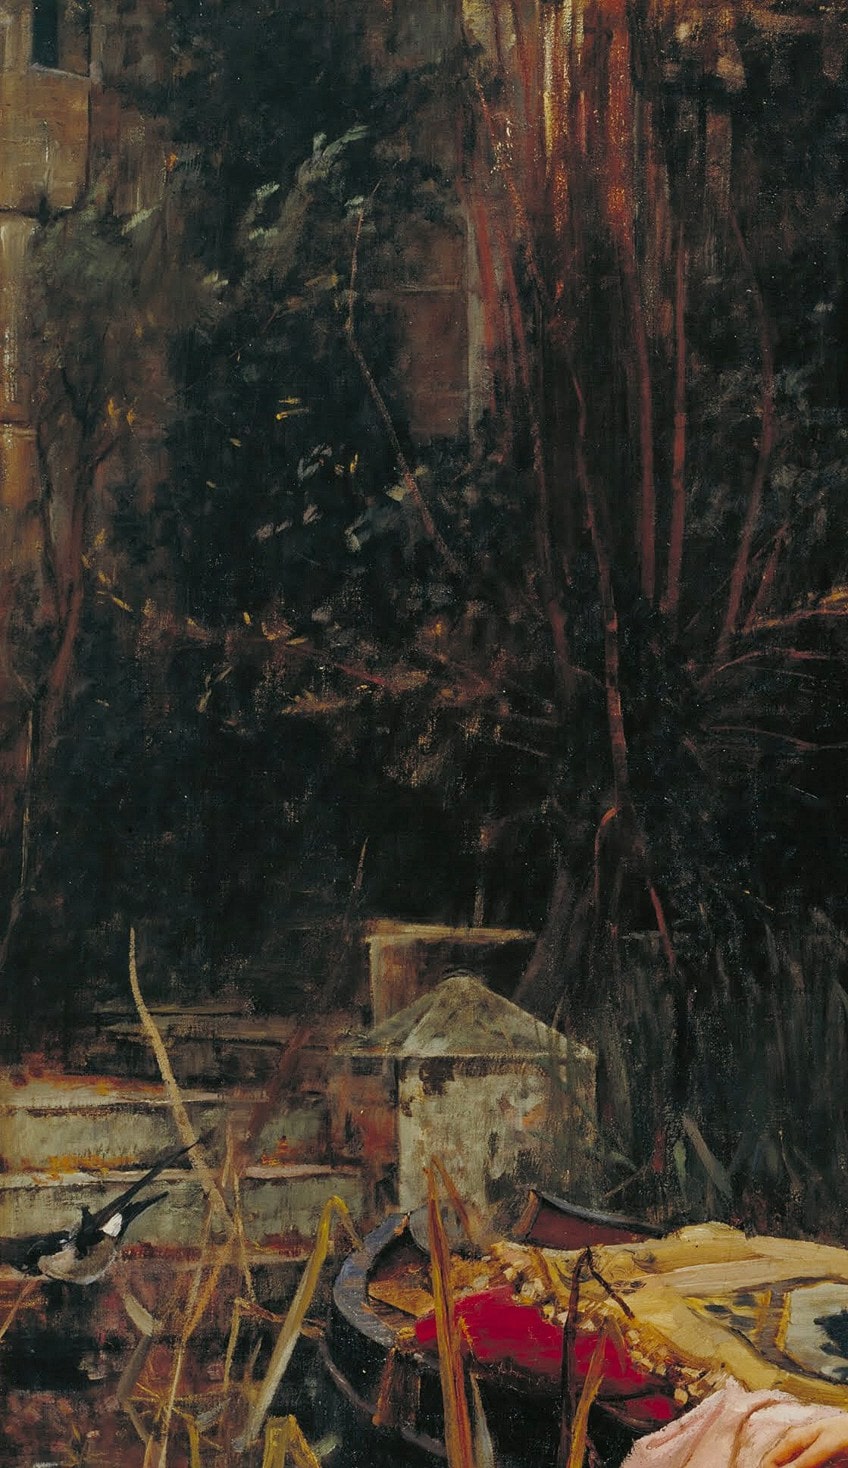 The Lady of Shalott Painting Study